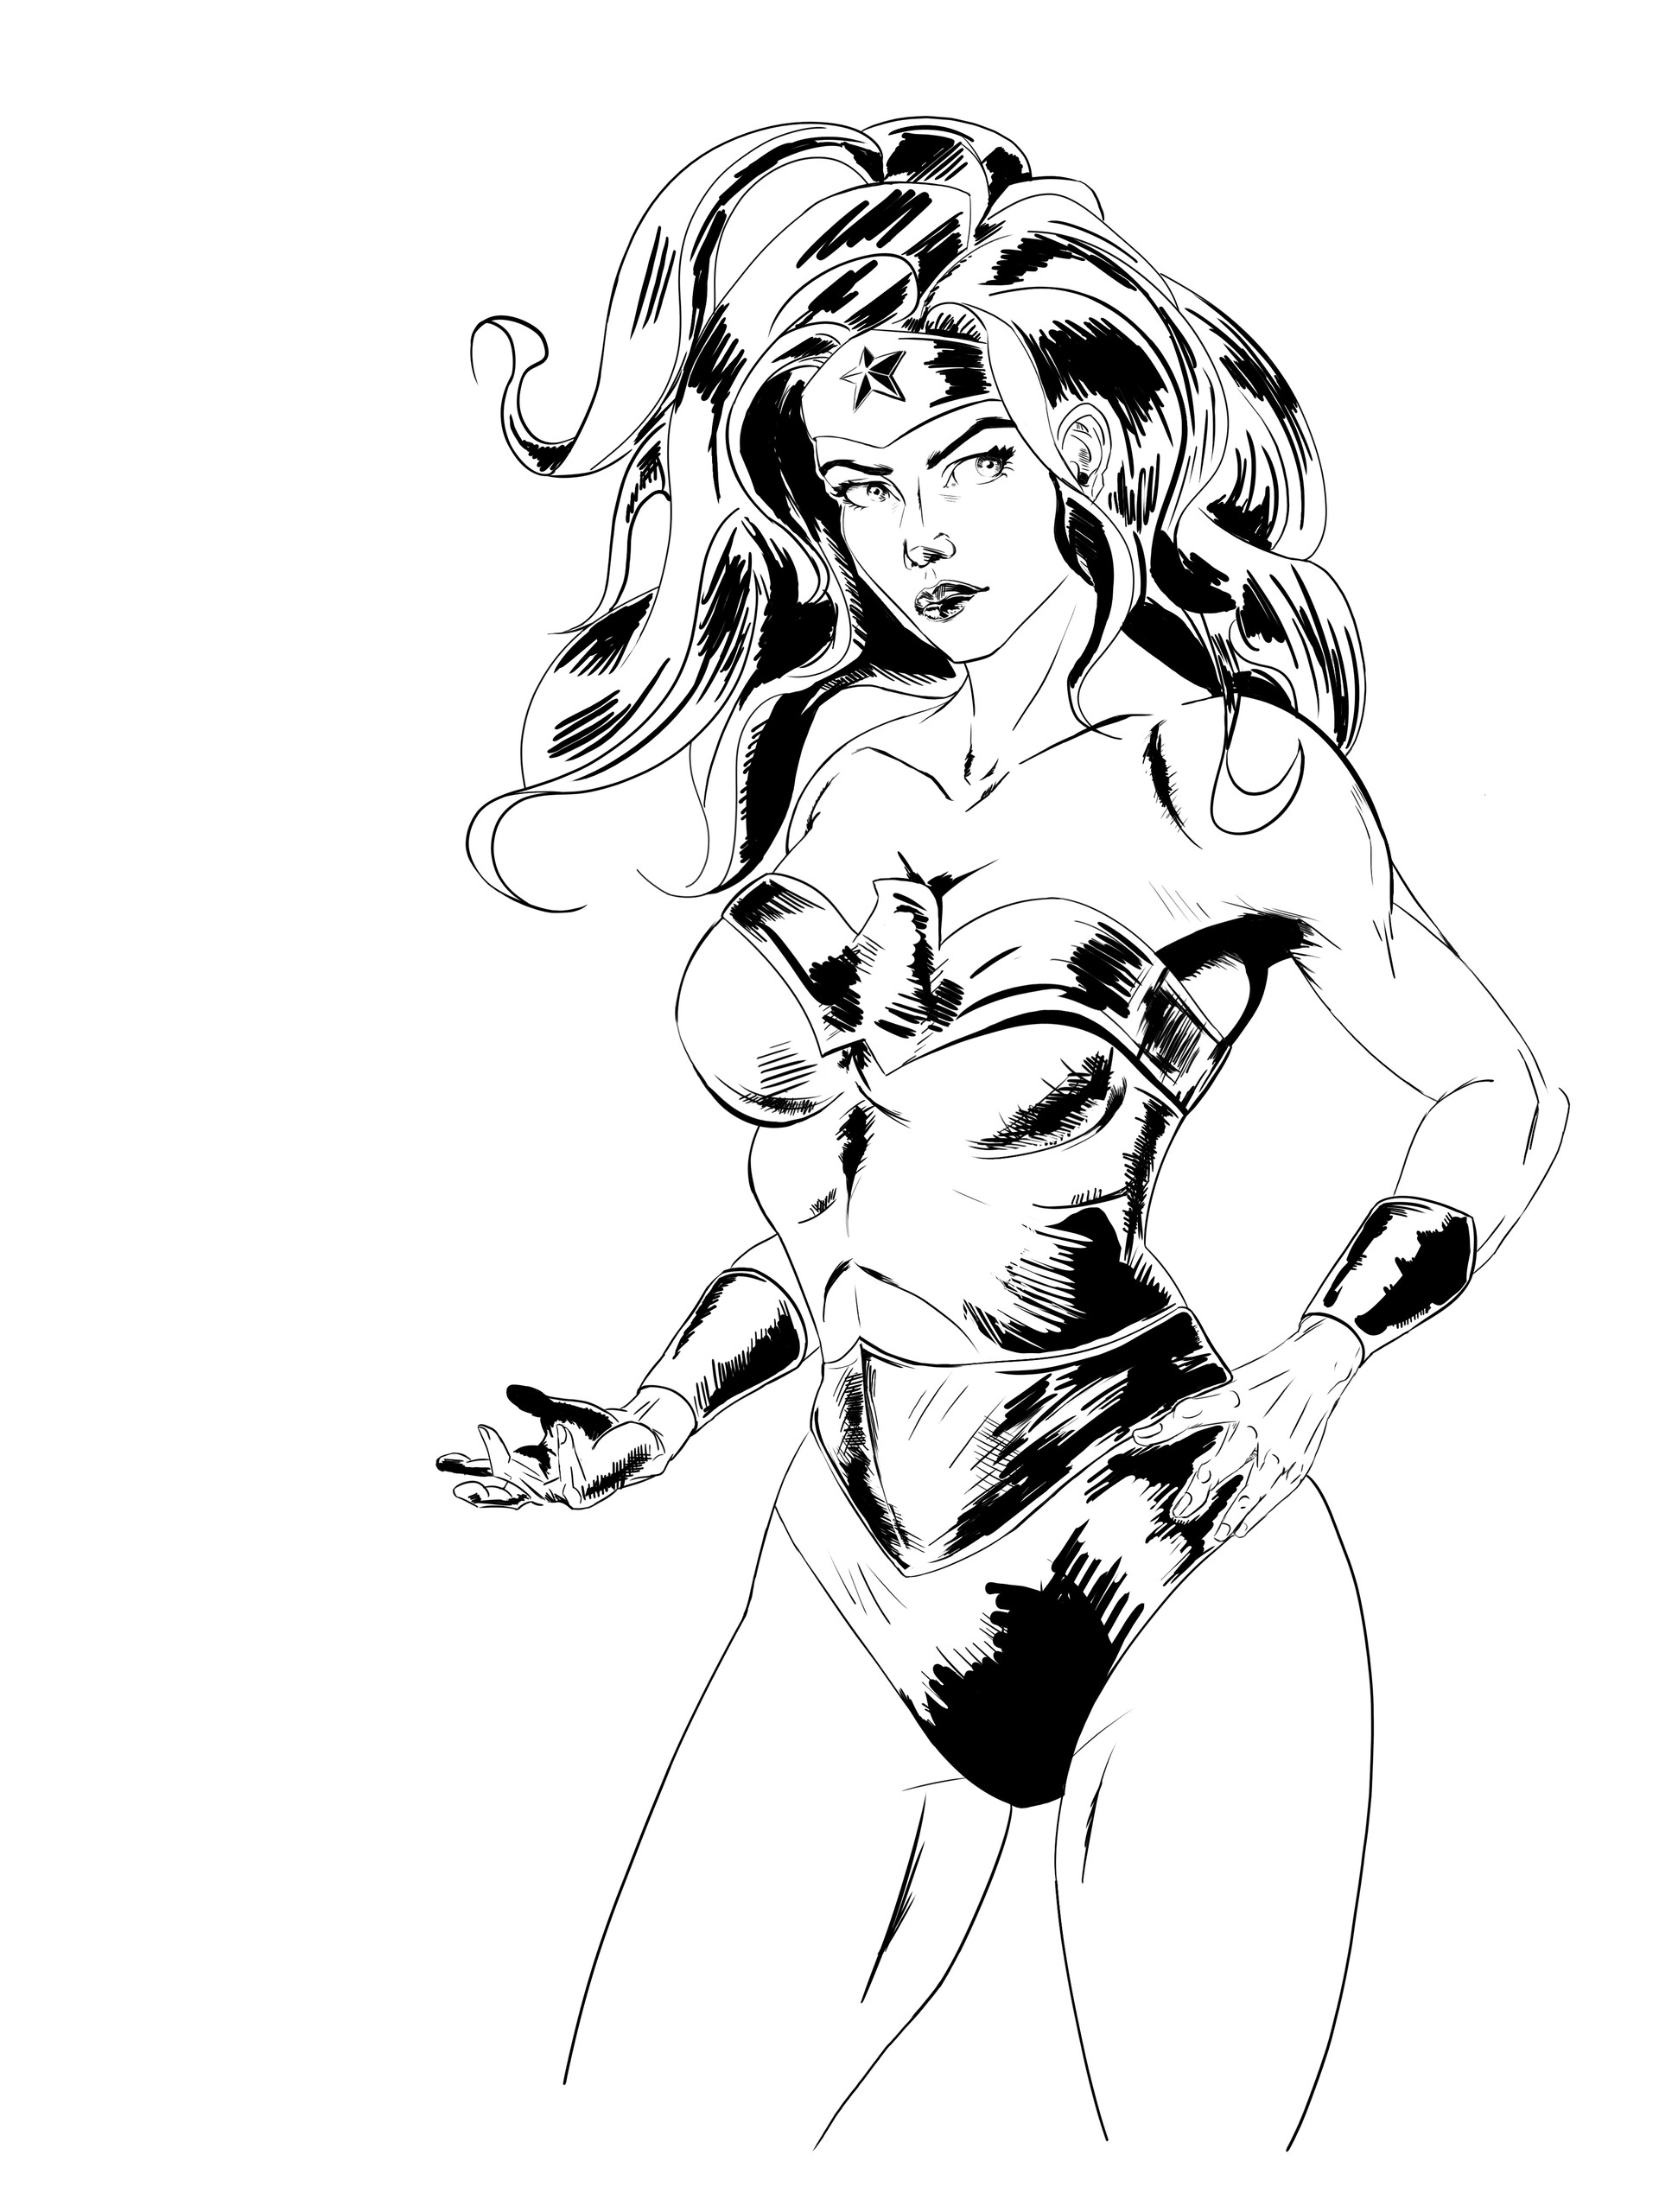 Jose Rigel - Jack Kirby Inspired Wonder Woman